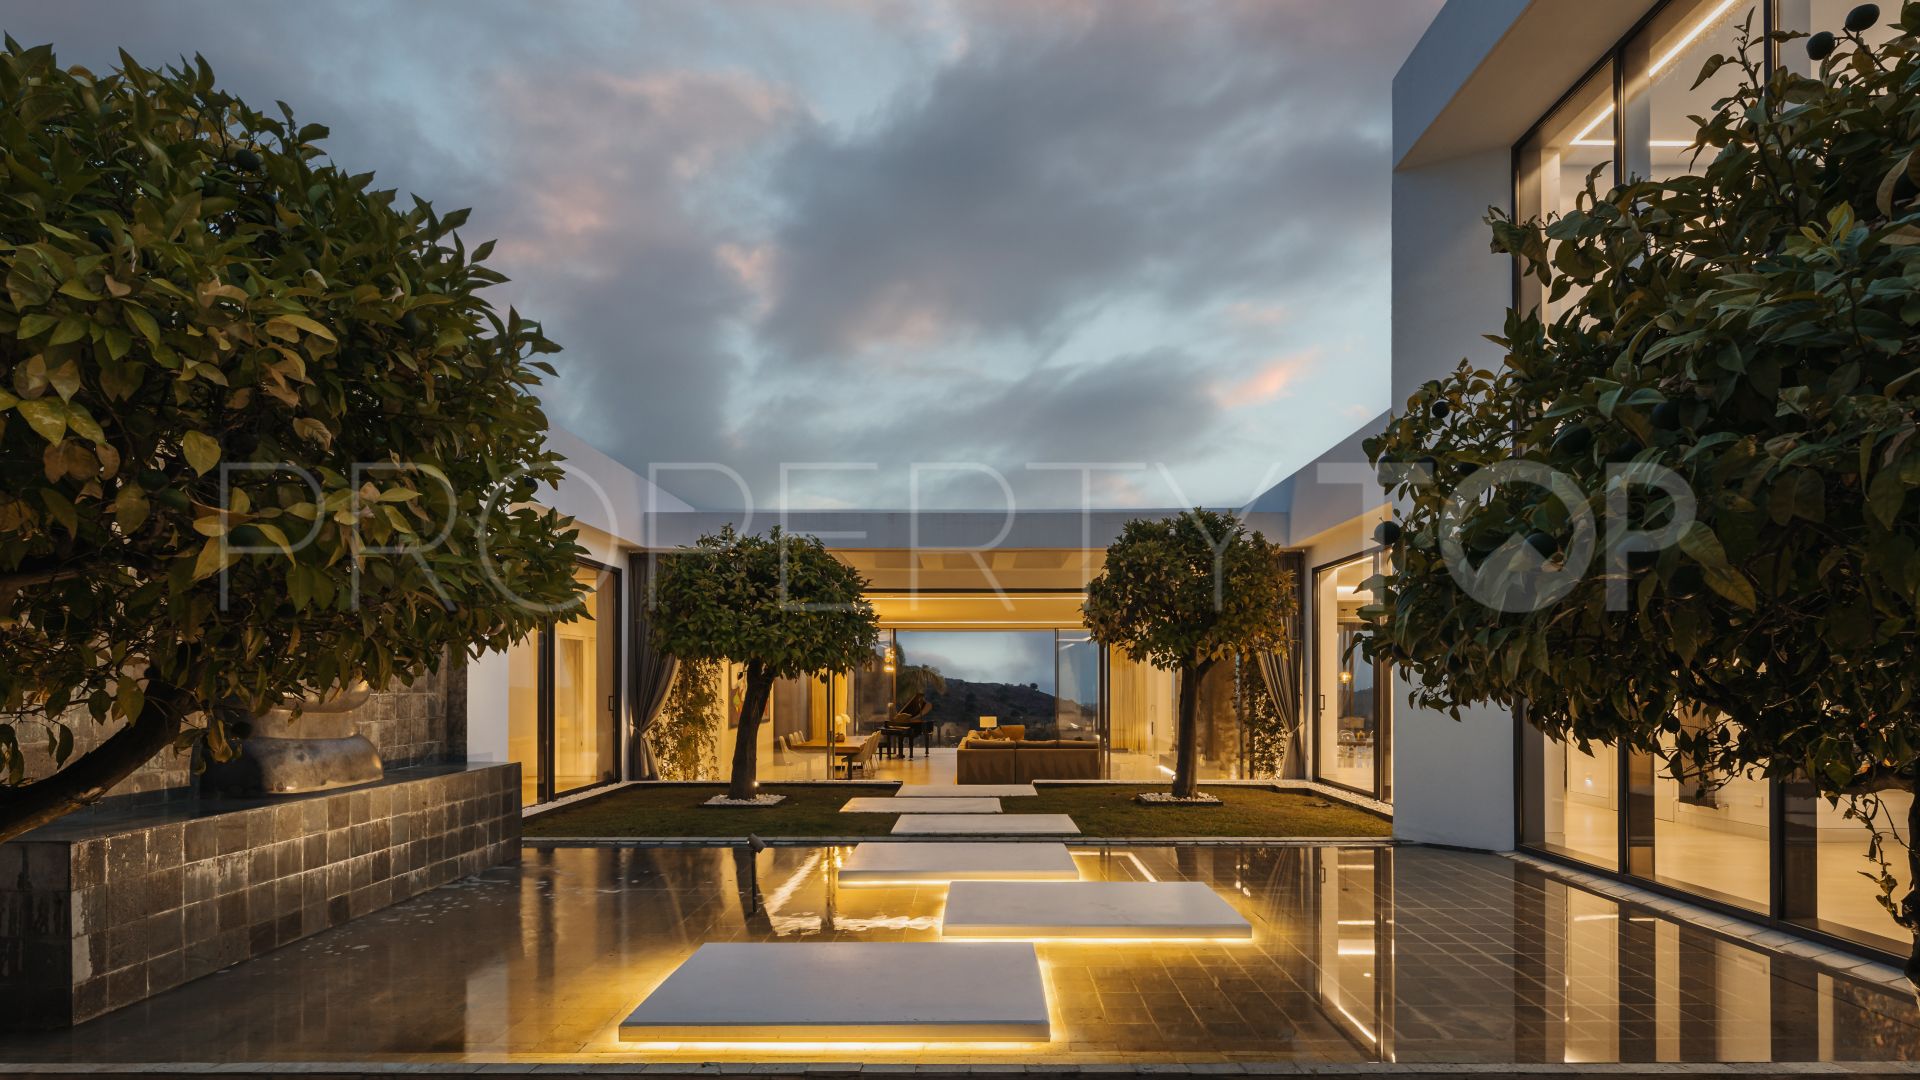 For sale villa in Marbella Club Golf Resort with 6 bedrooms